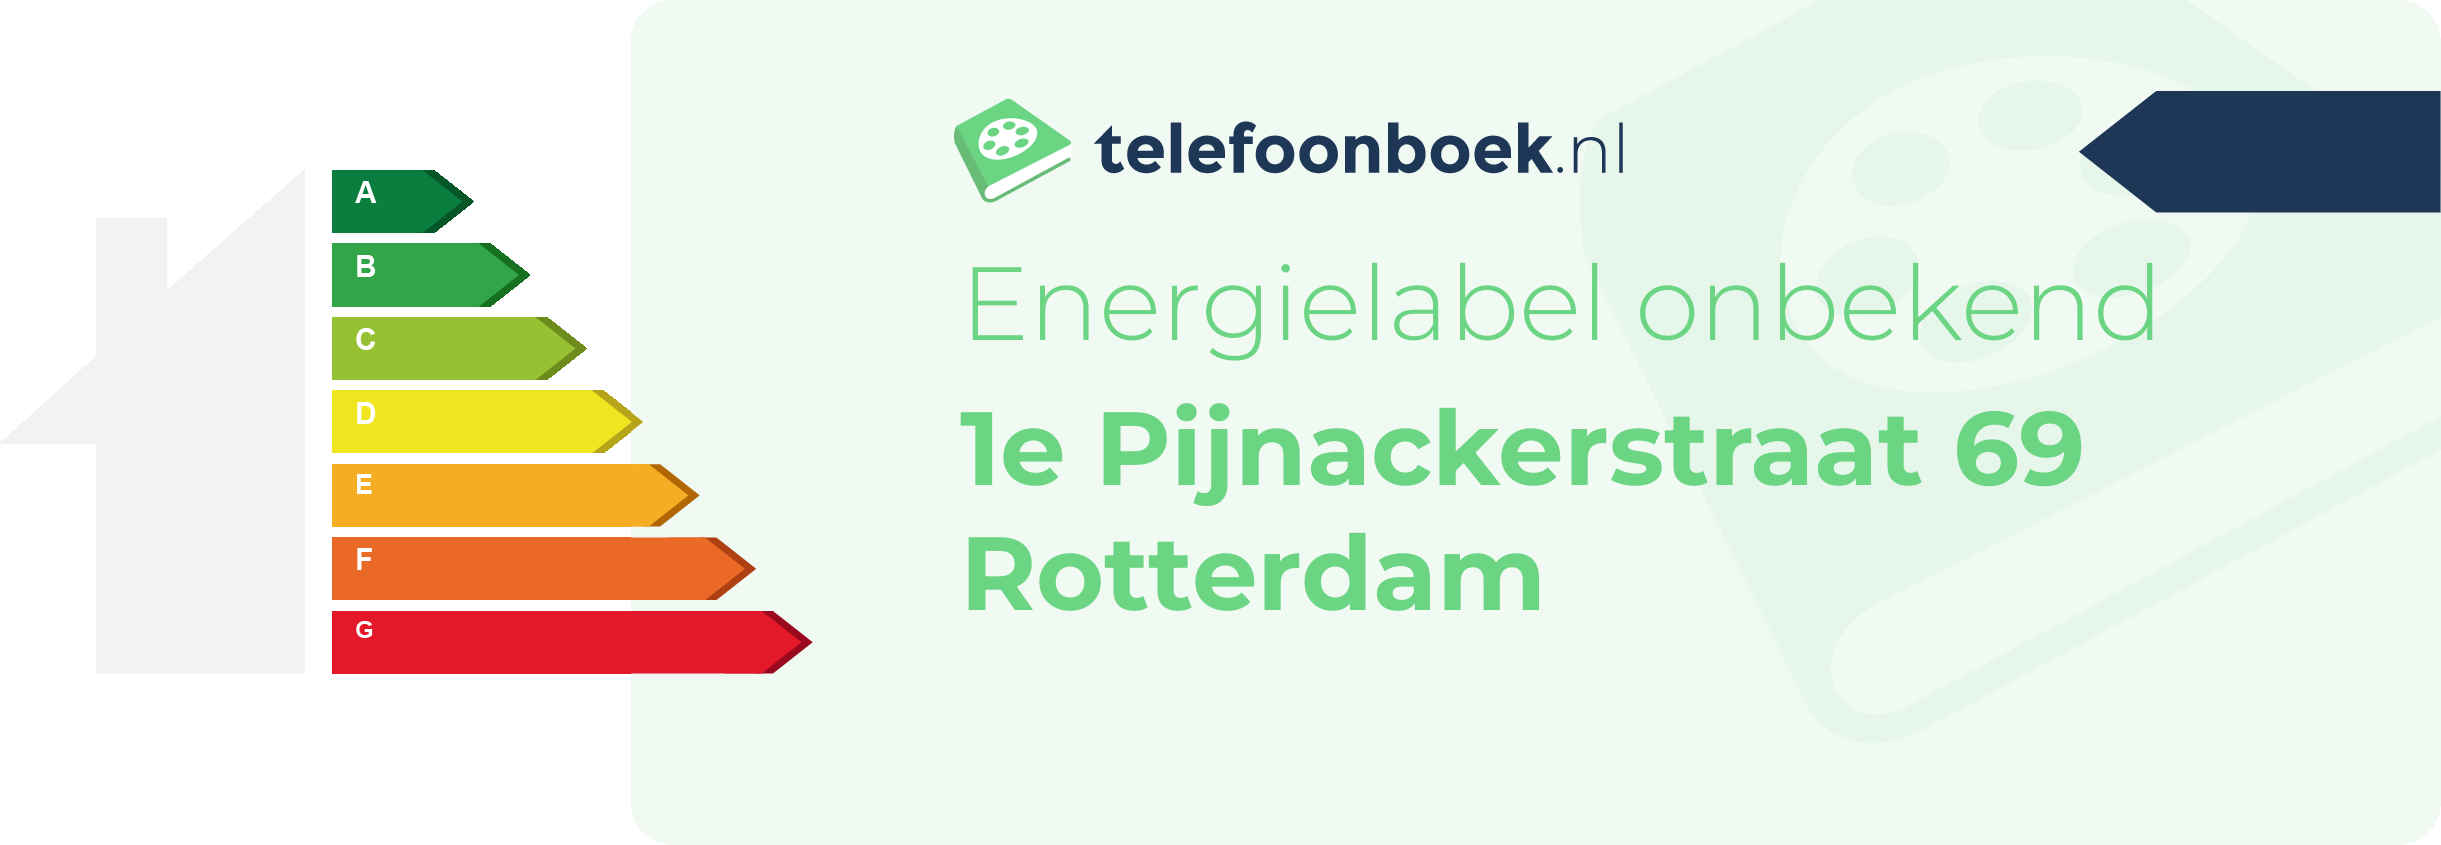 Energielabel 1e Pijnackerstraat 69 Rotterdam